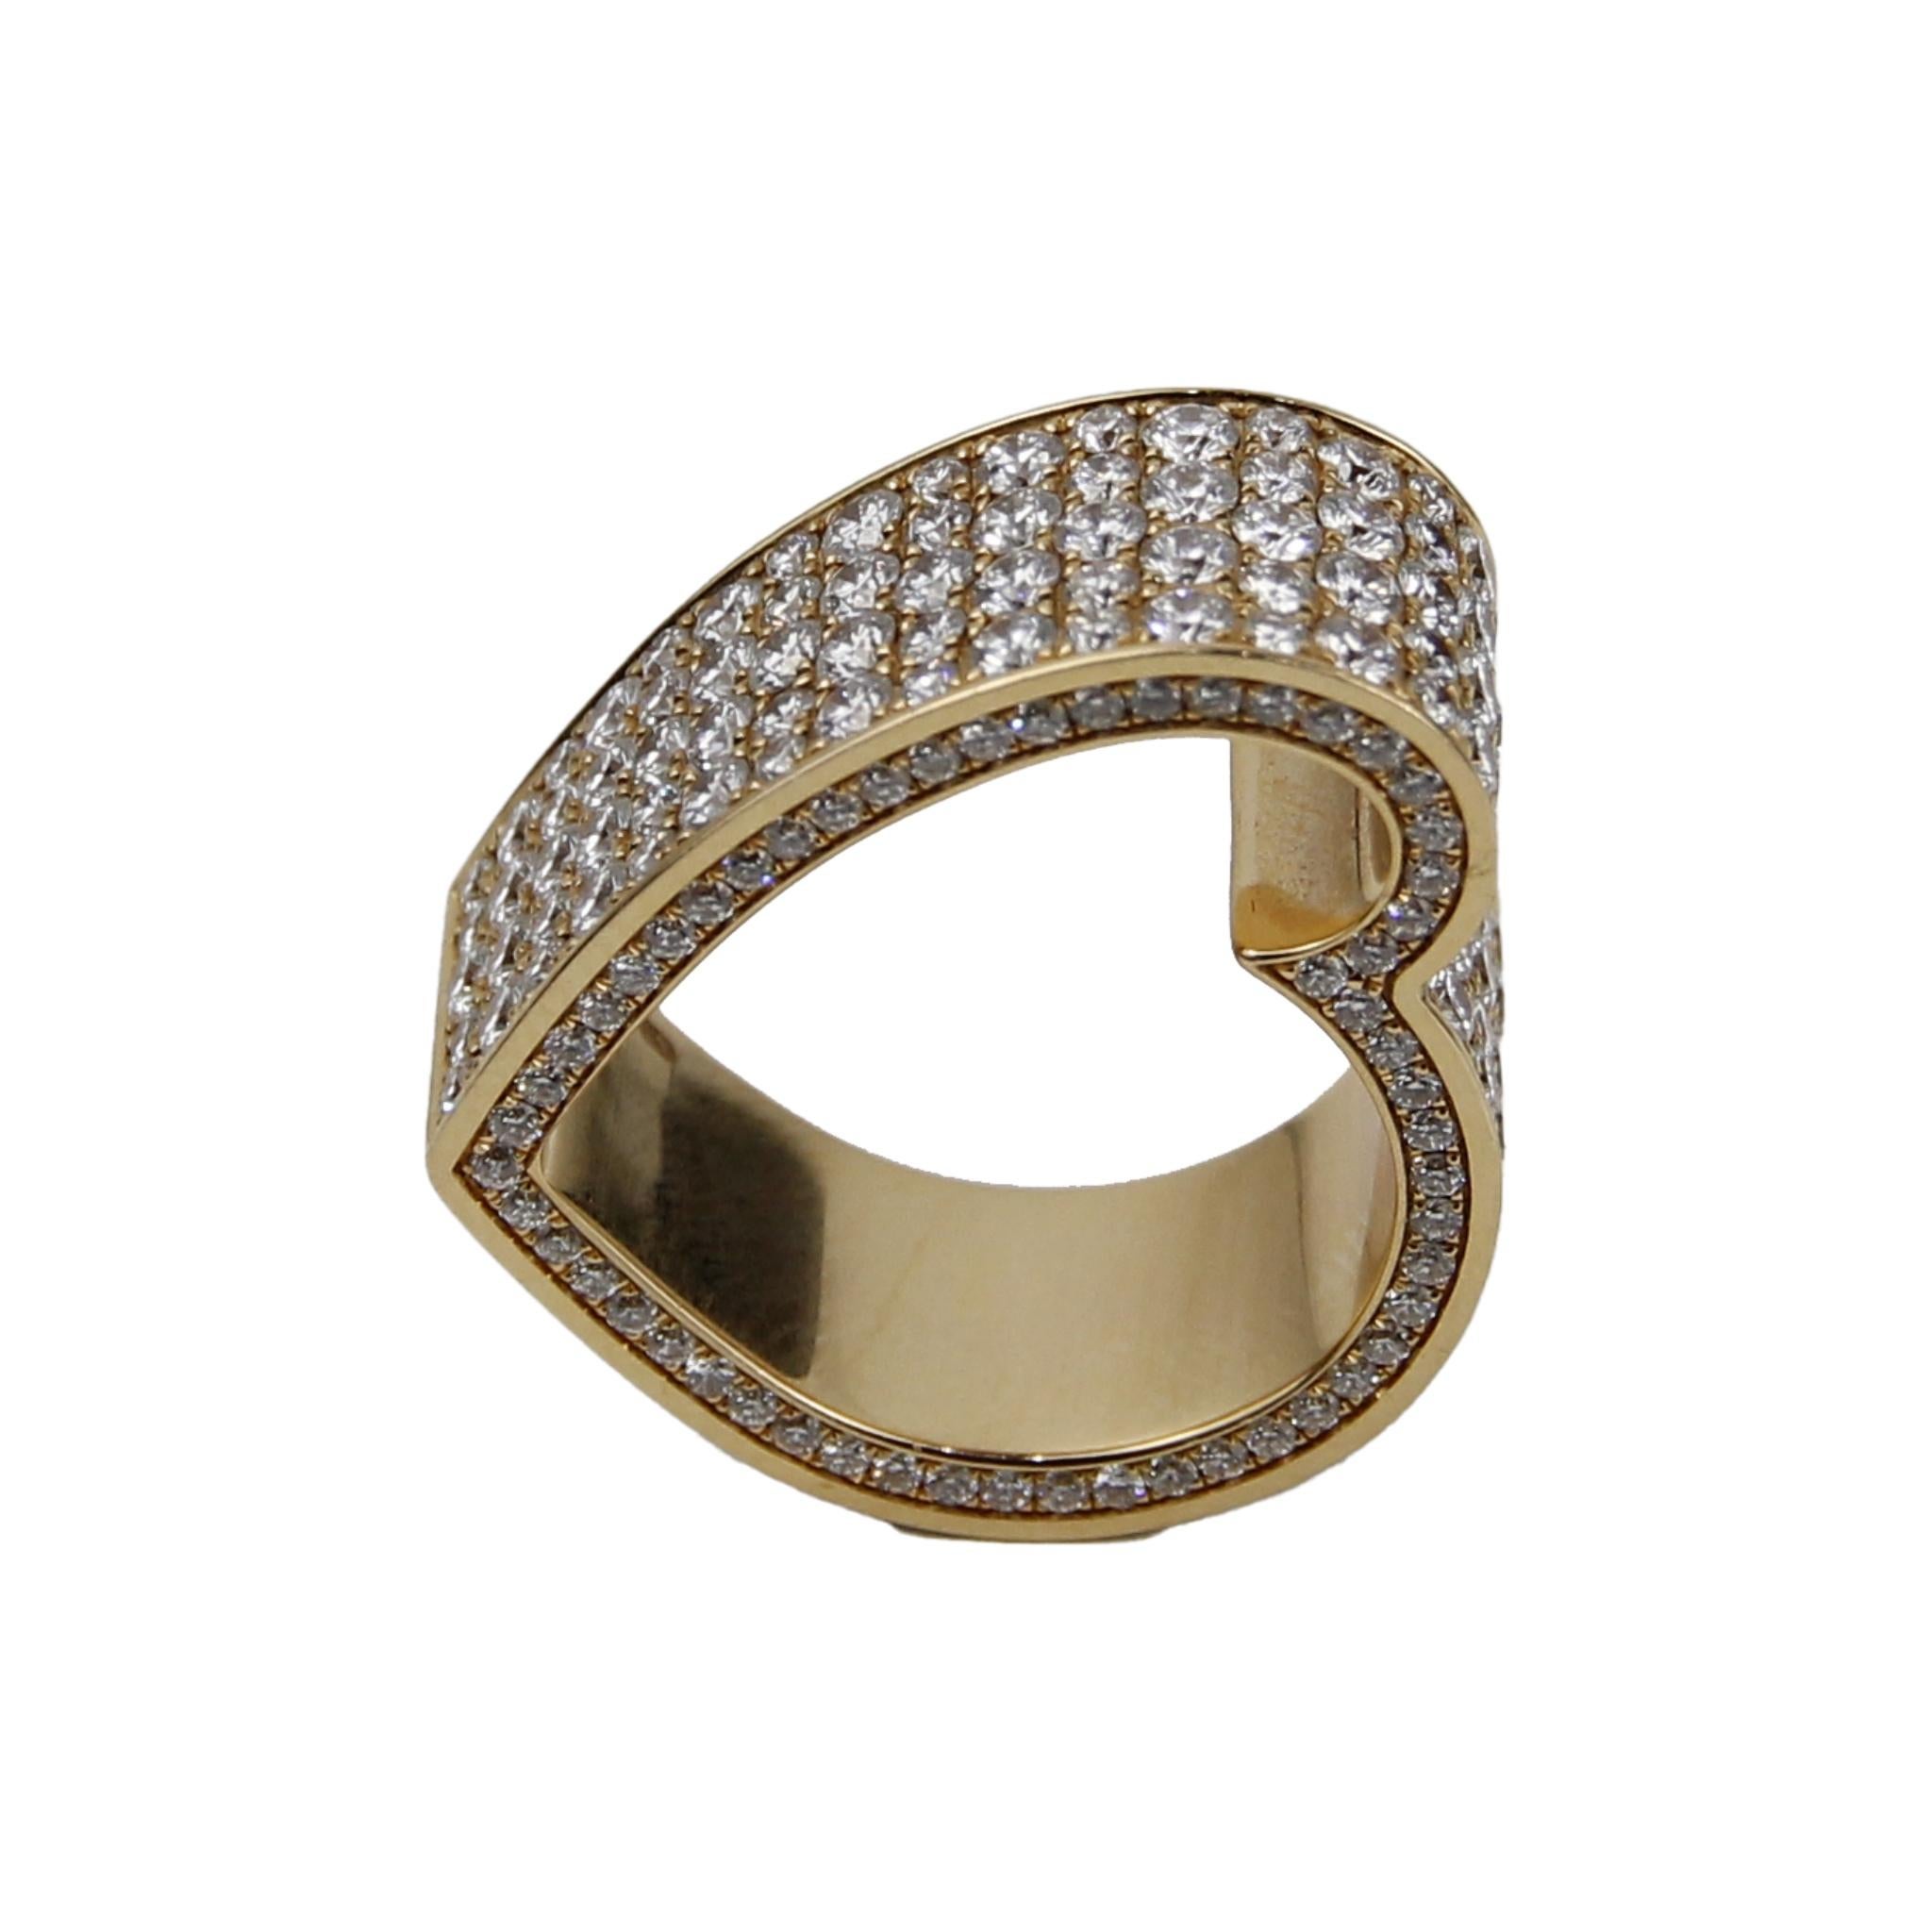 Roger Dubuis Heart Ring
18K Yellow Gold
Diamond: 5.67ctw
Size: 6
SKU: MRD01432
Retail price: $24,000.00